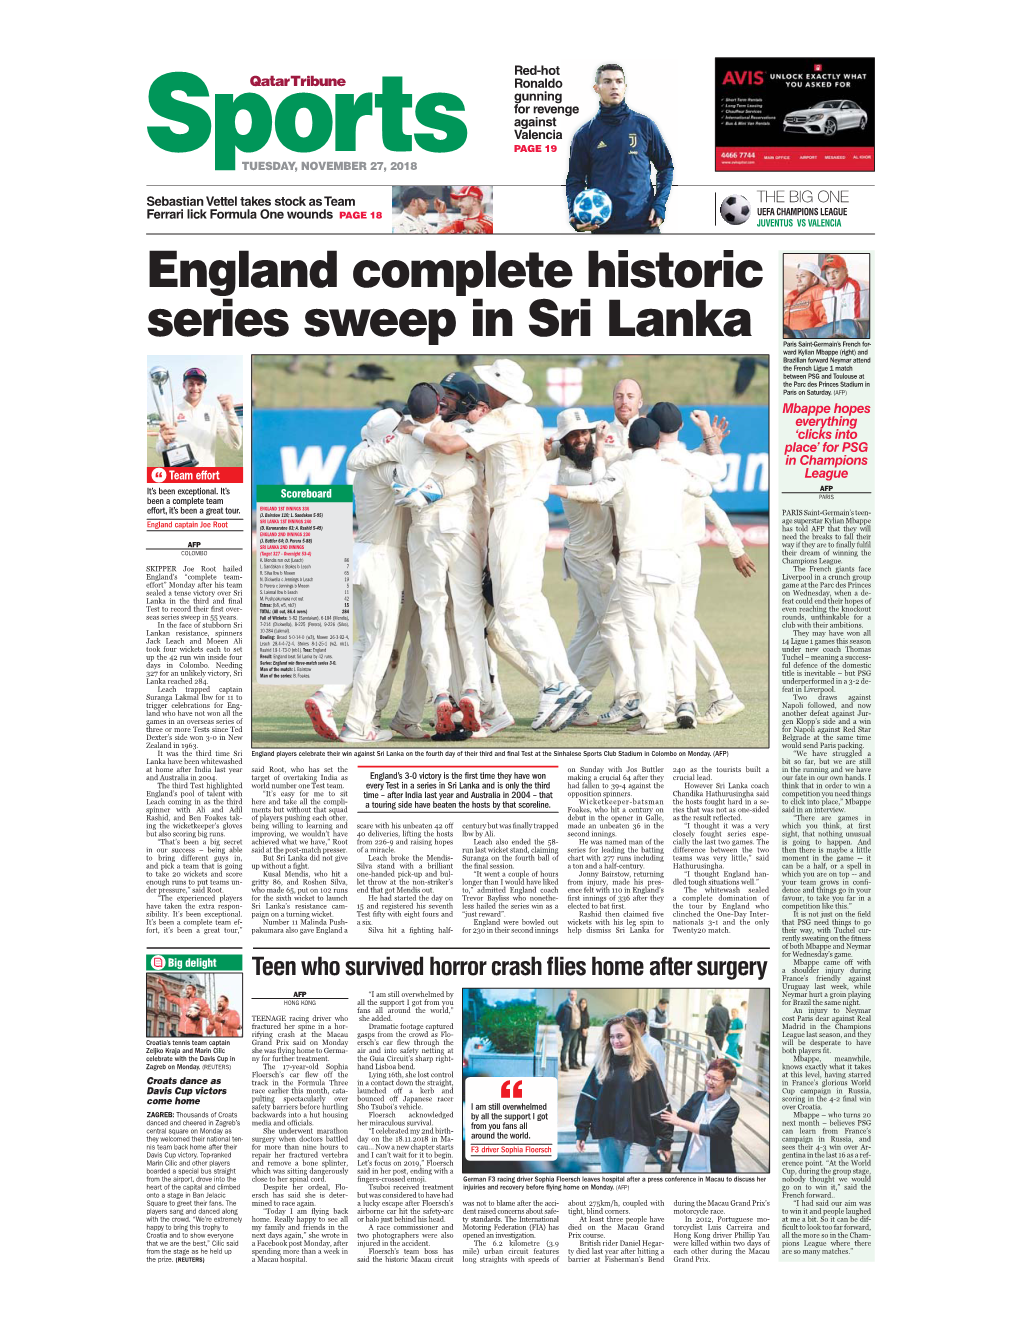 England Complete Historic Series Sweep in Sri Lanka